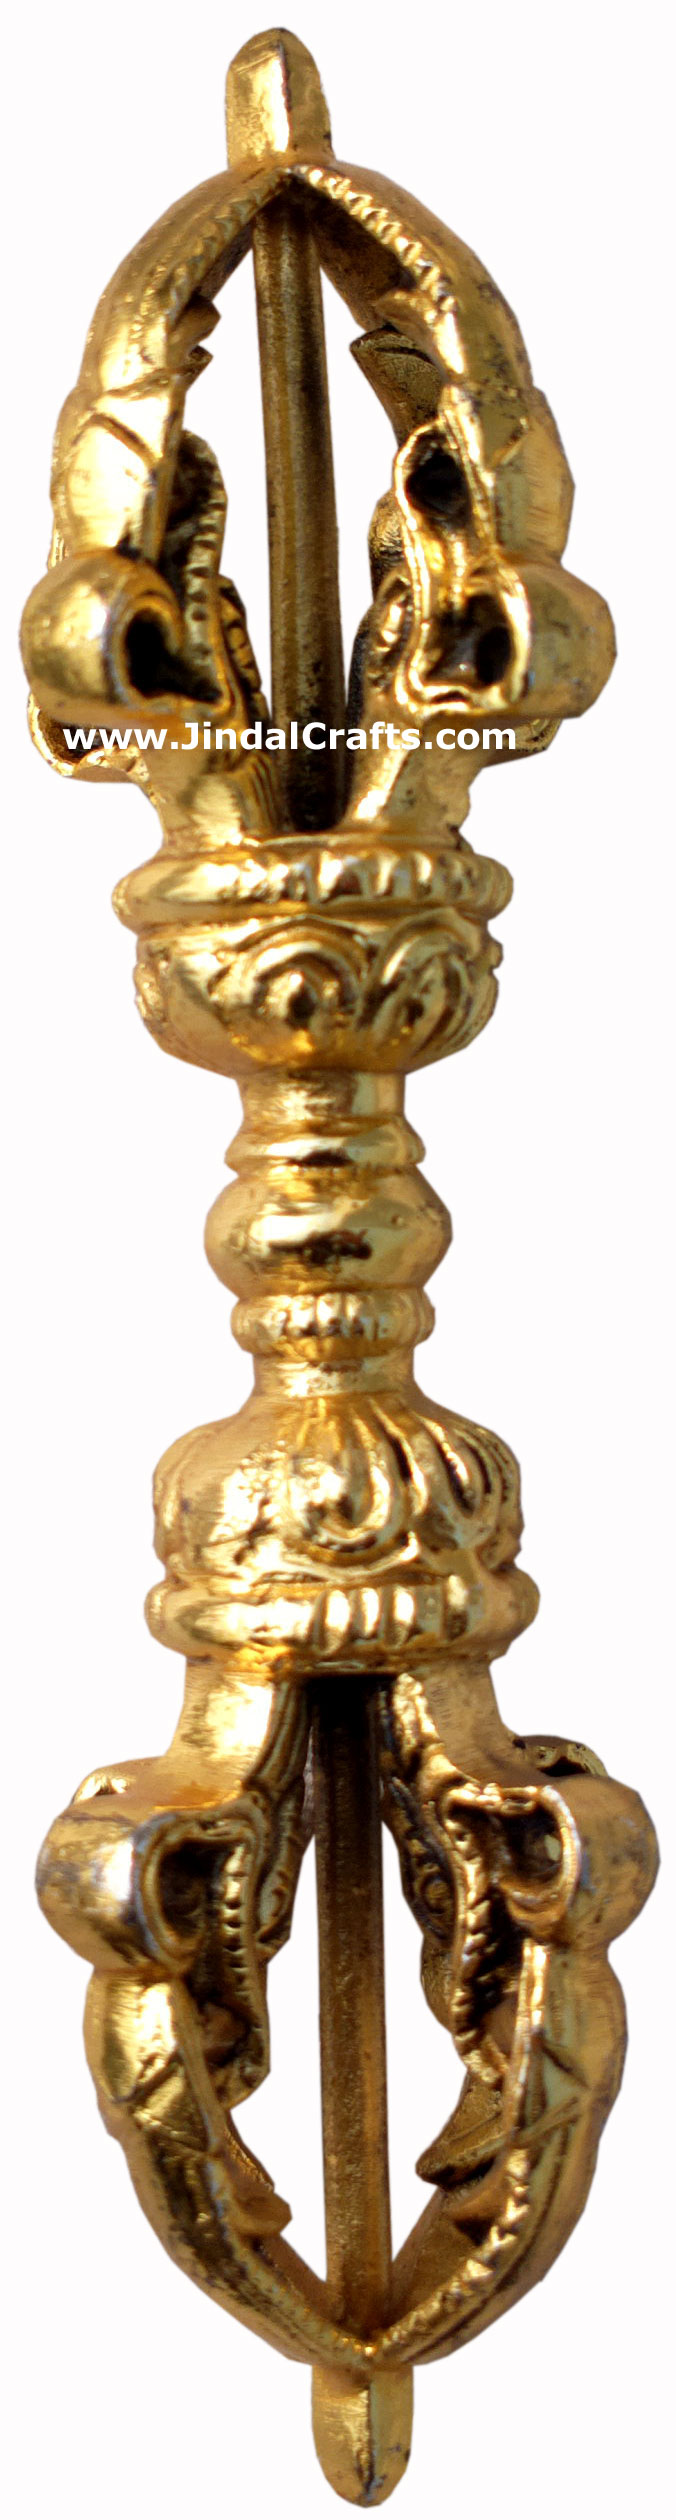 Tiberan Dorje Hand Carved Indian Art Craft Handicraft Home Decor Brass Figurine